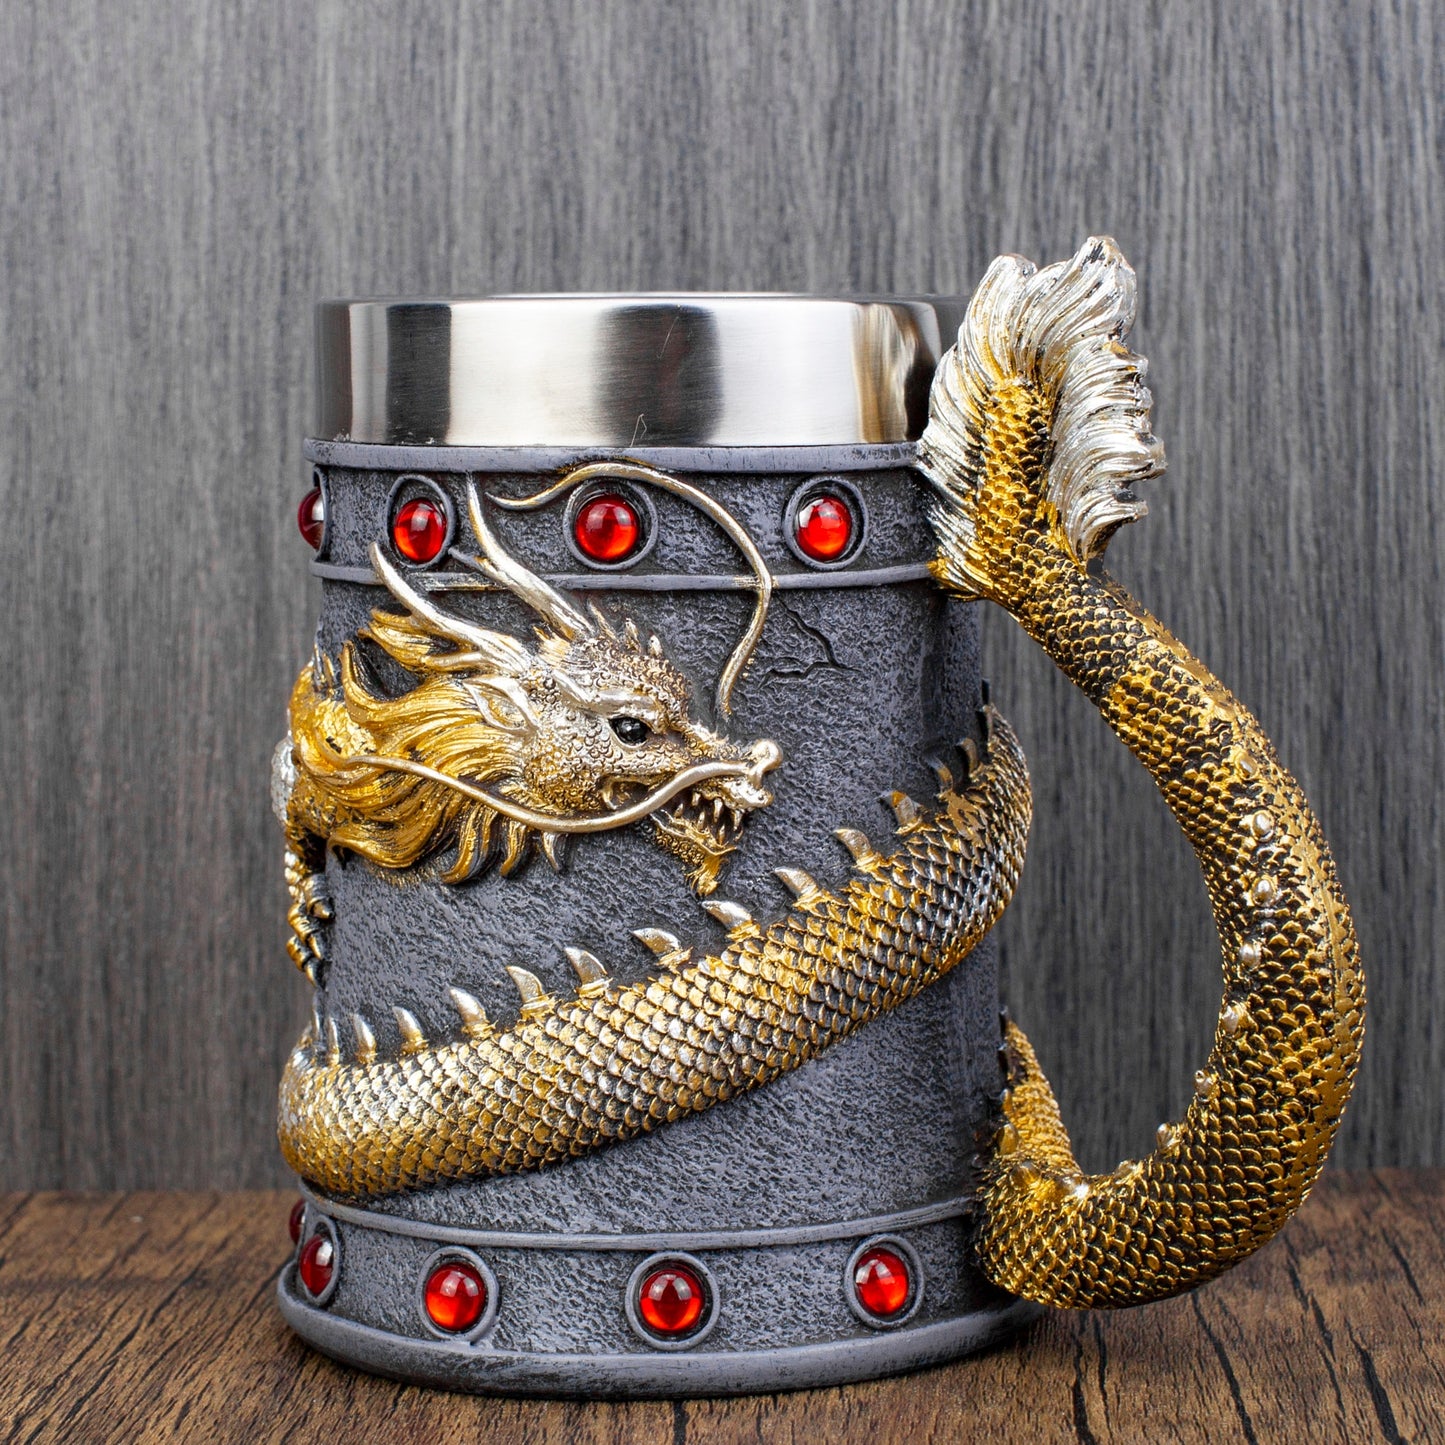 Chinese dragon inspired tankard mug